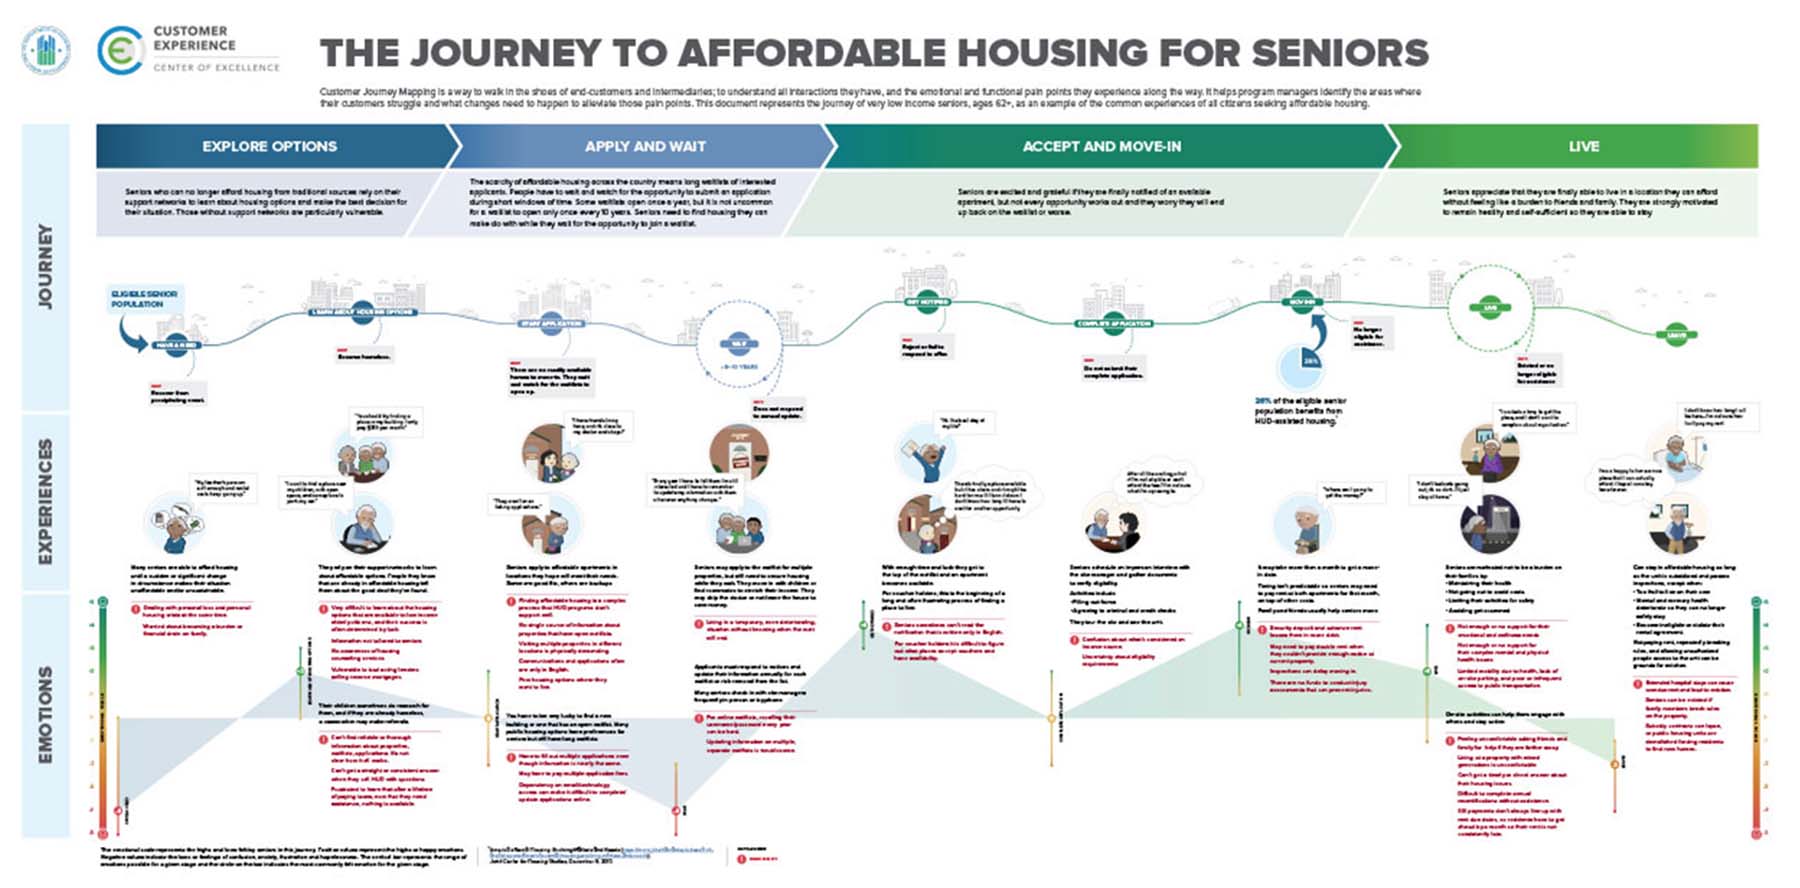 CoE - HUD Senior Affordable Housing Journey